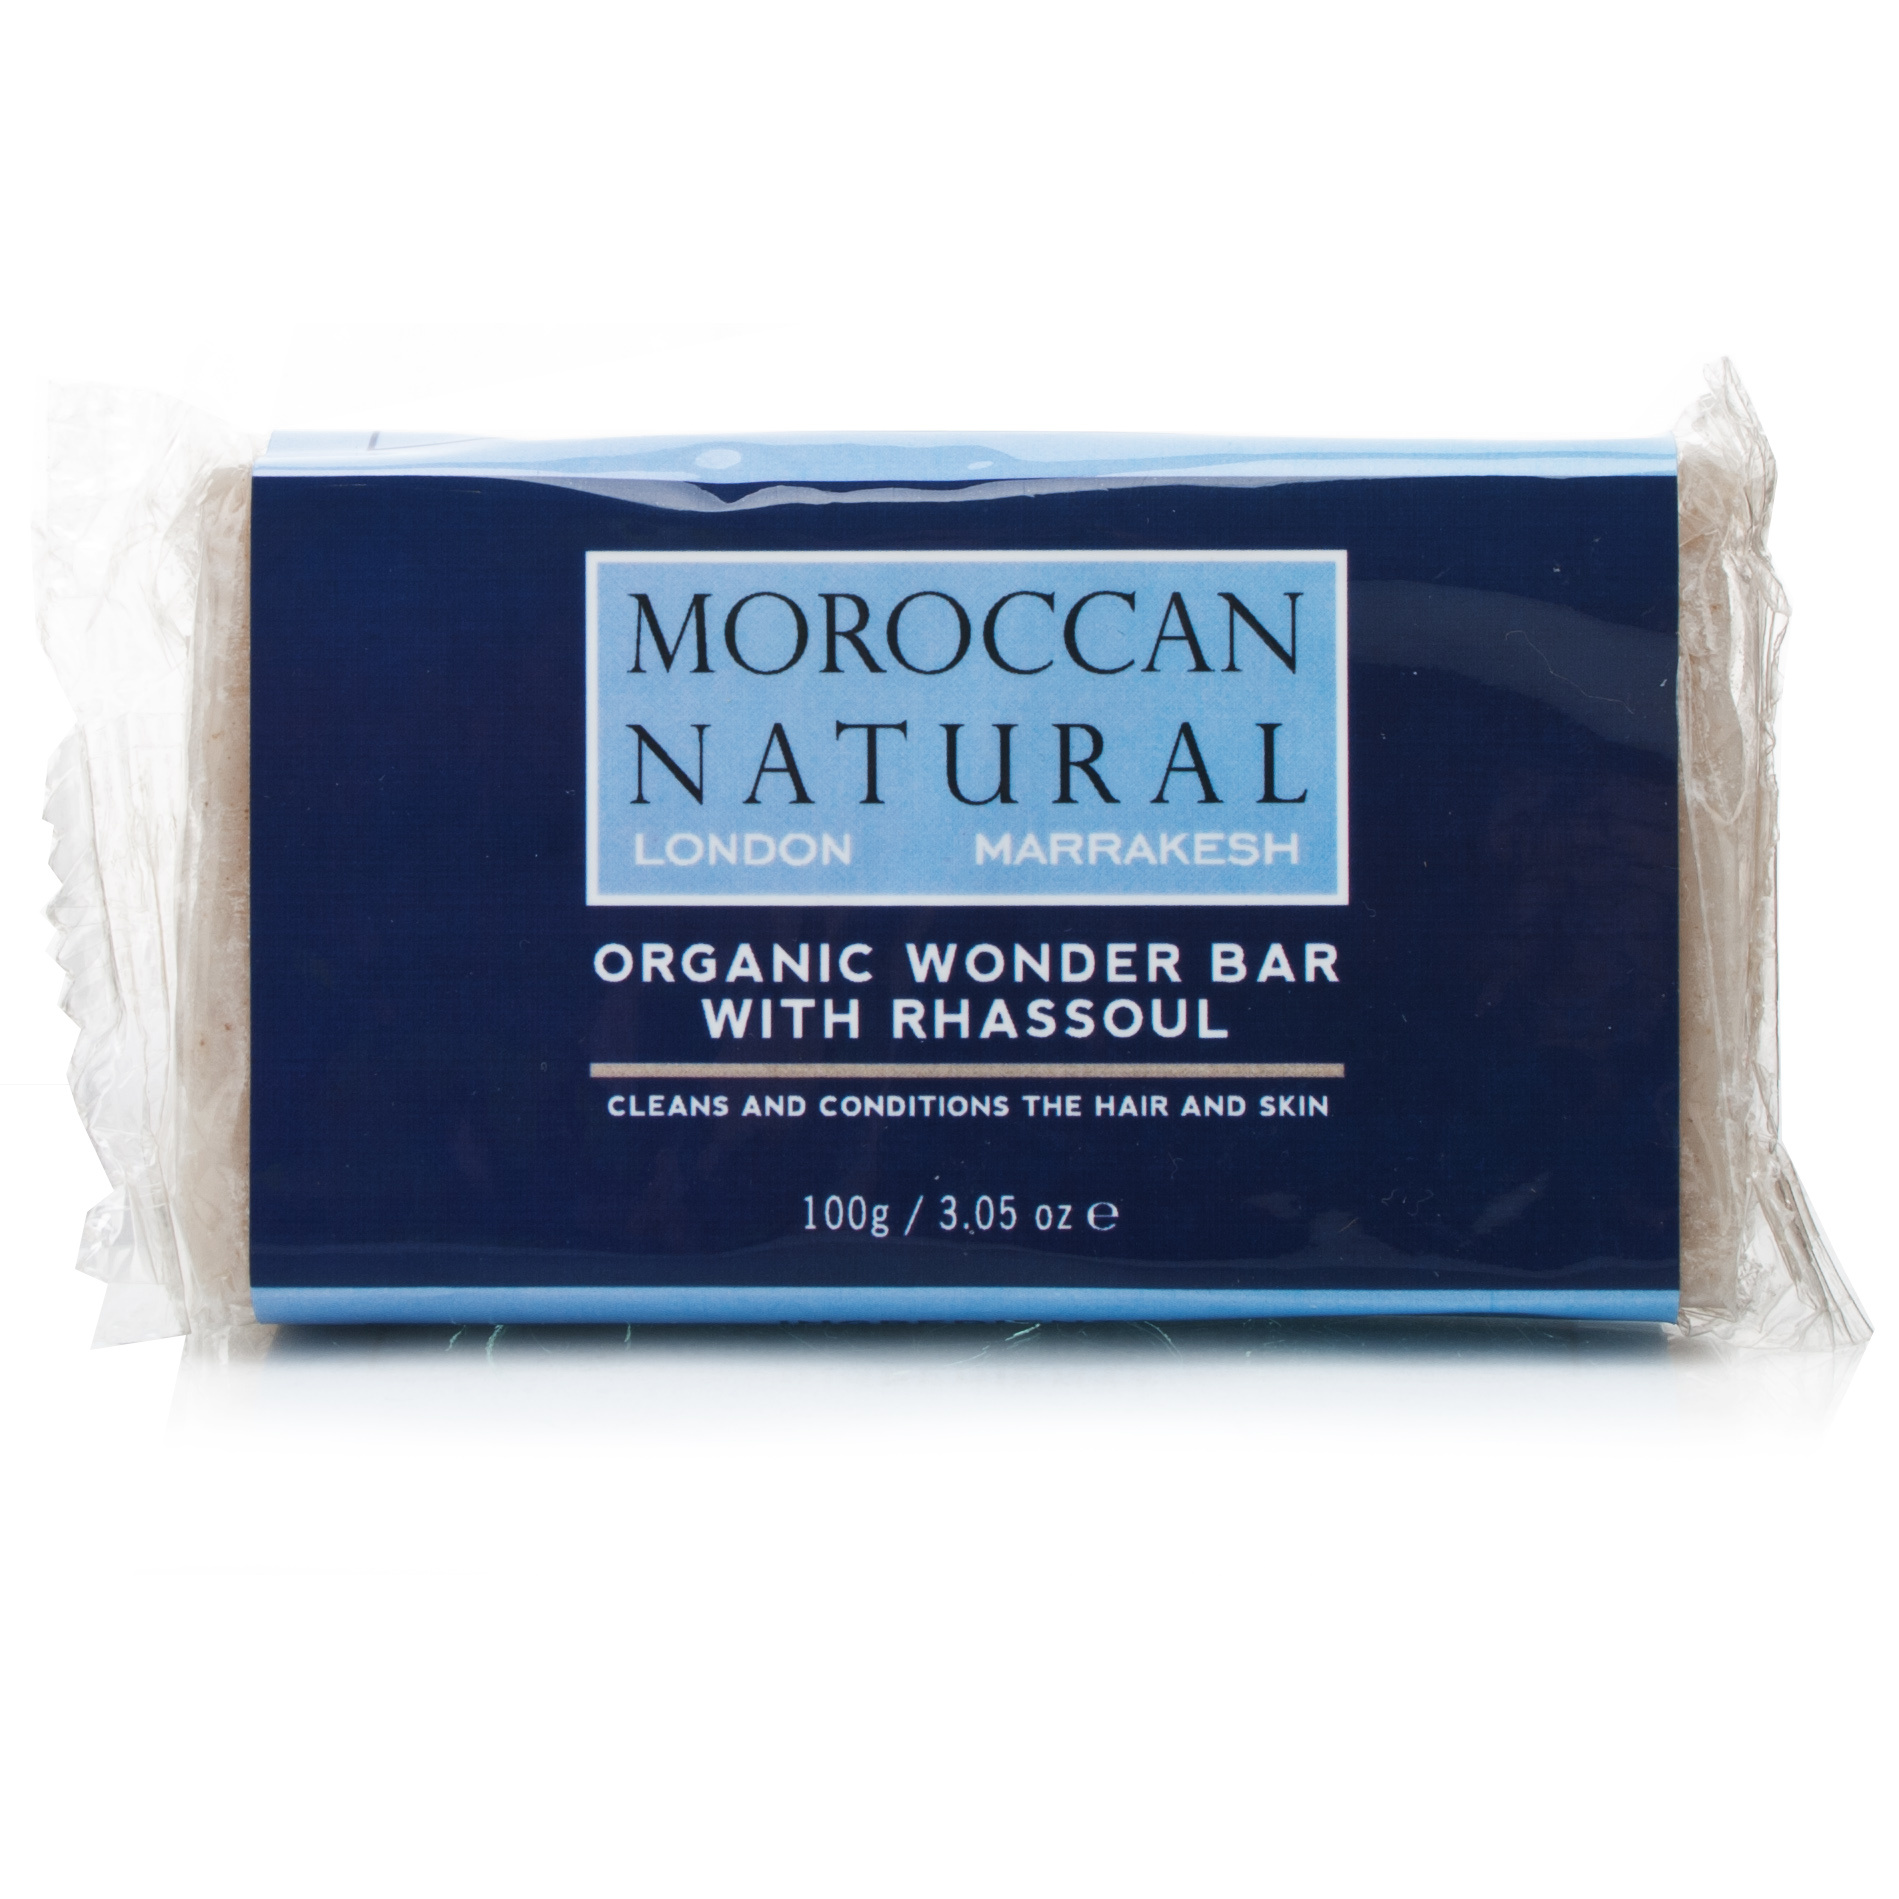 Moroccan Natural Organic Wonder Bar With Rhassoul